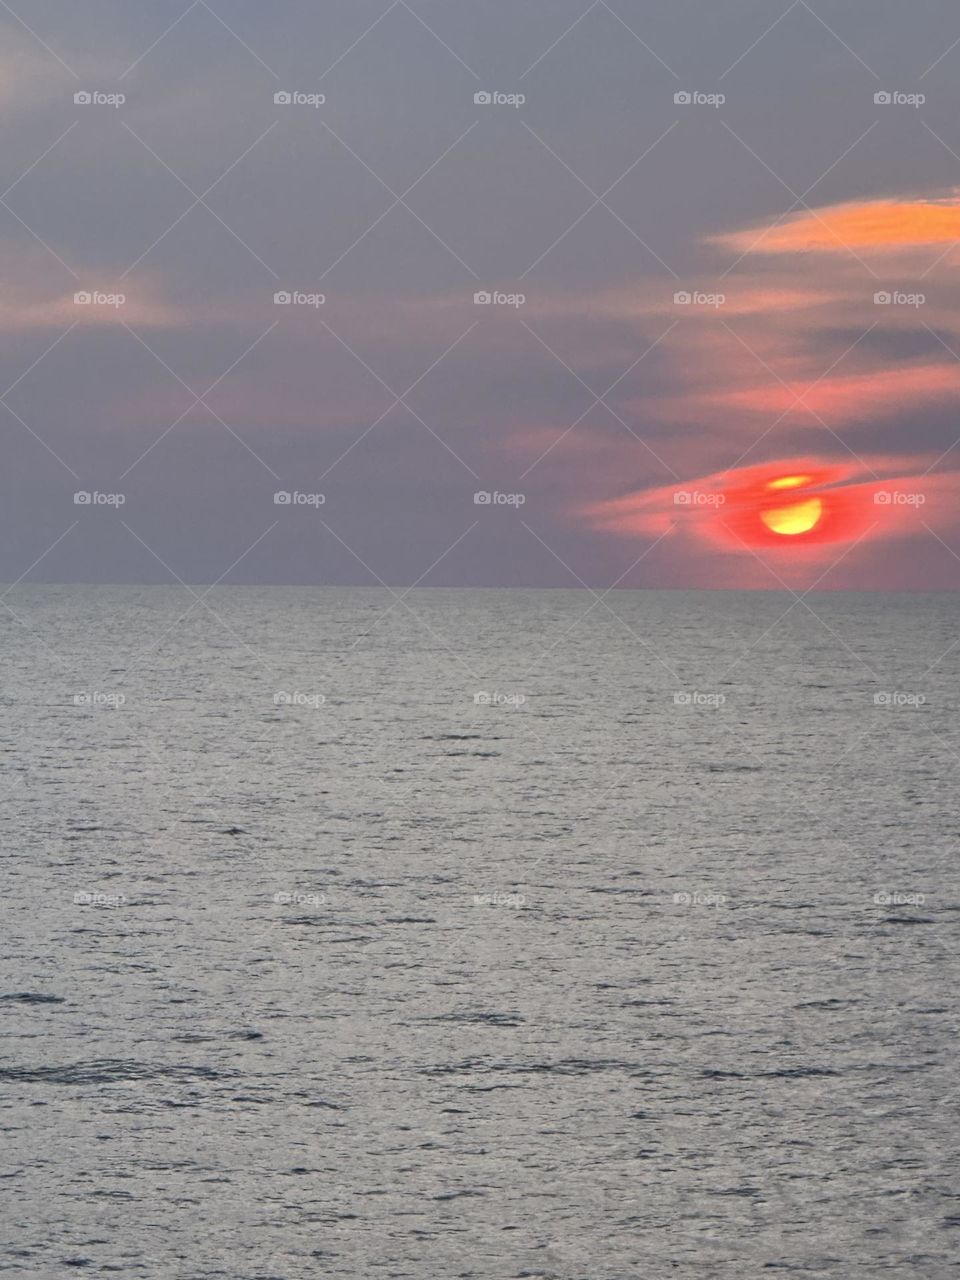 Unbelievable sunset over the open ocean in Bahamas 